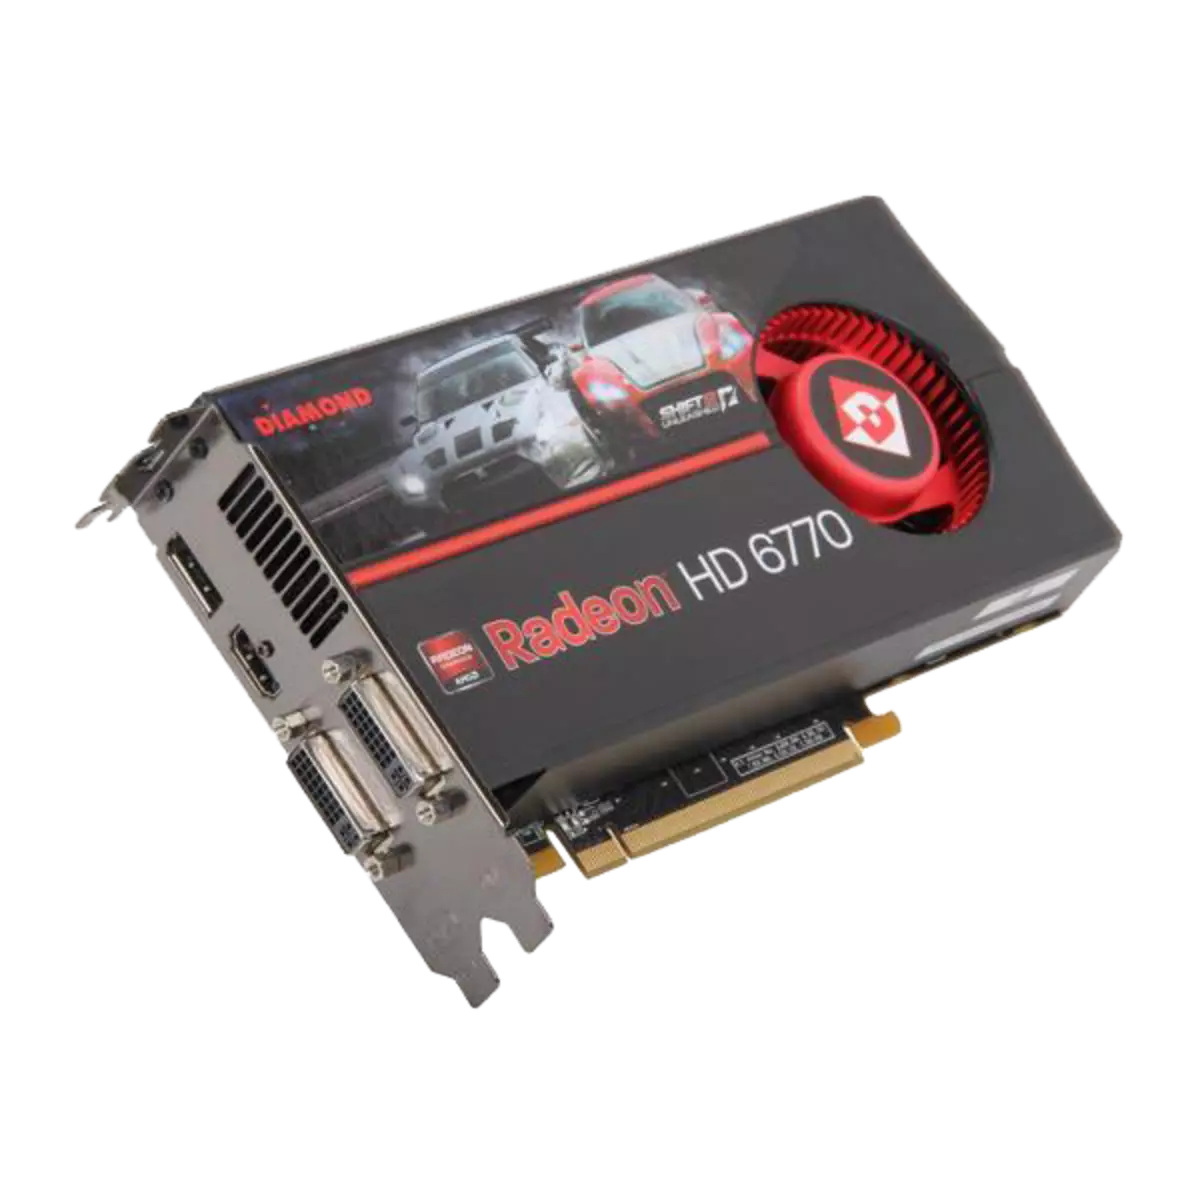 Unduh Driver untuk AMD Radeon HD 6700 Series